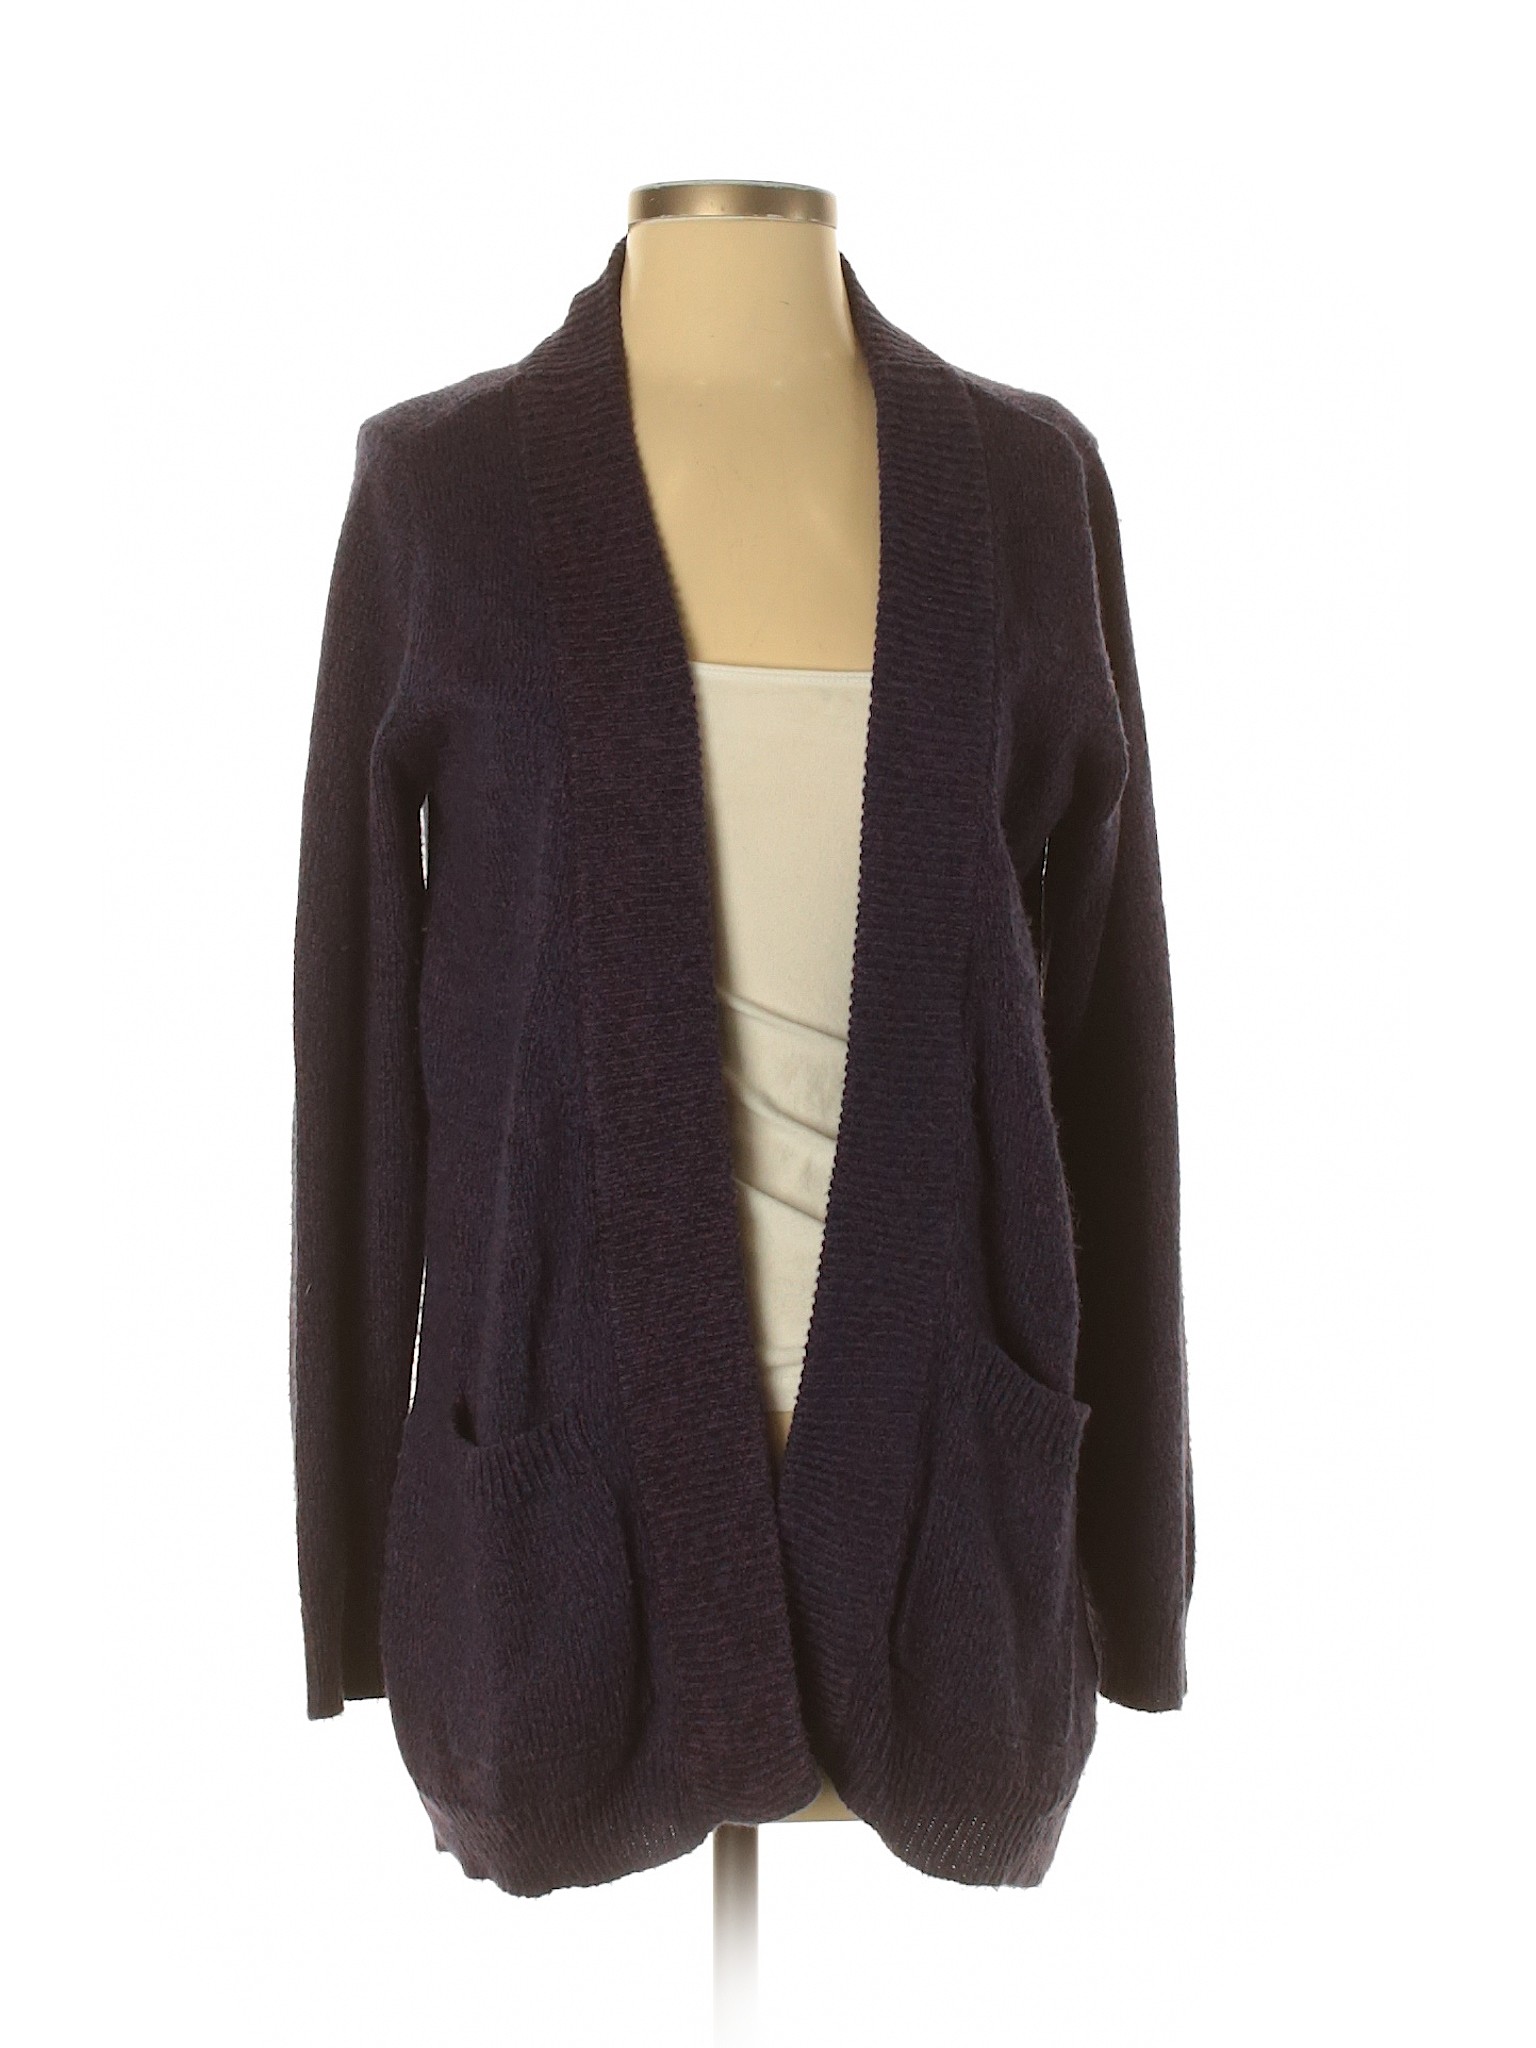 H&M Women Purple Cardigan M | eBay